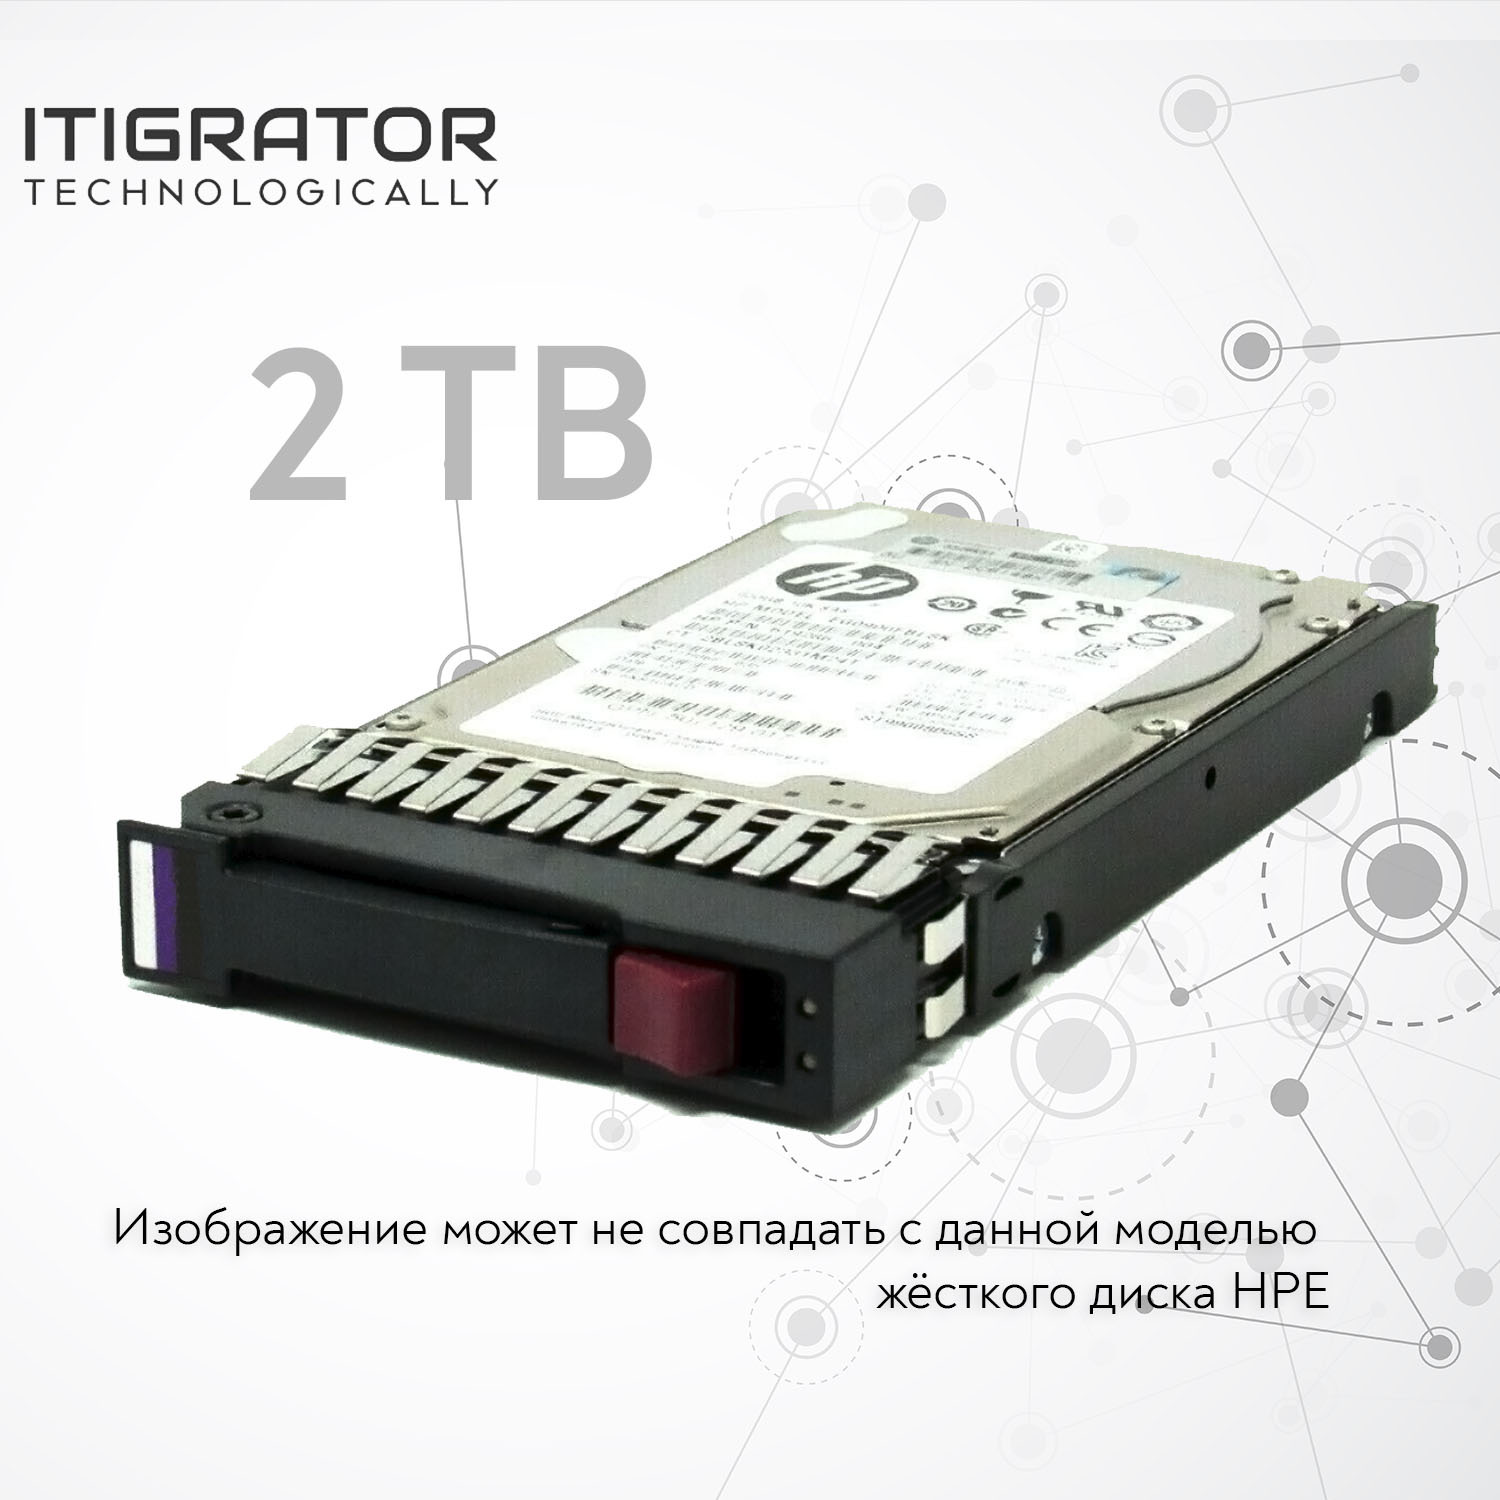 Жесткий диск HPE 2Tb 2TB форм-фактор 2.5" интерфейс SAS [765466-B21]